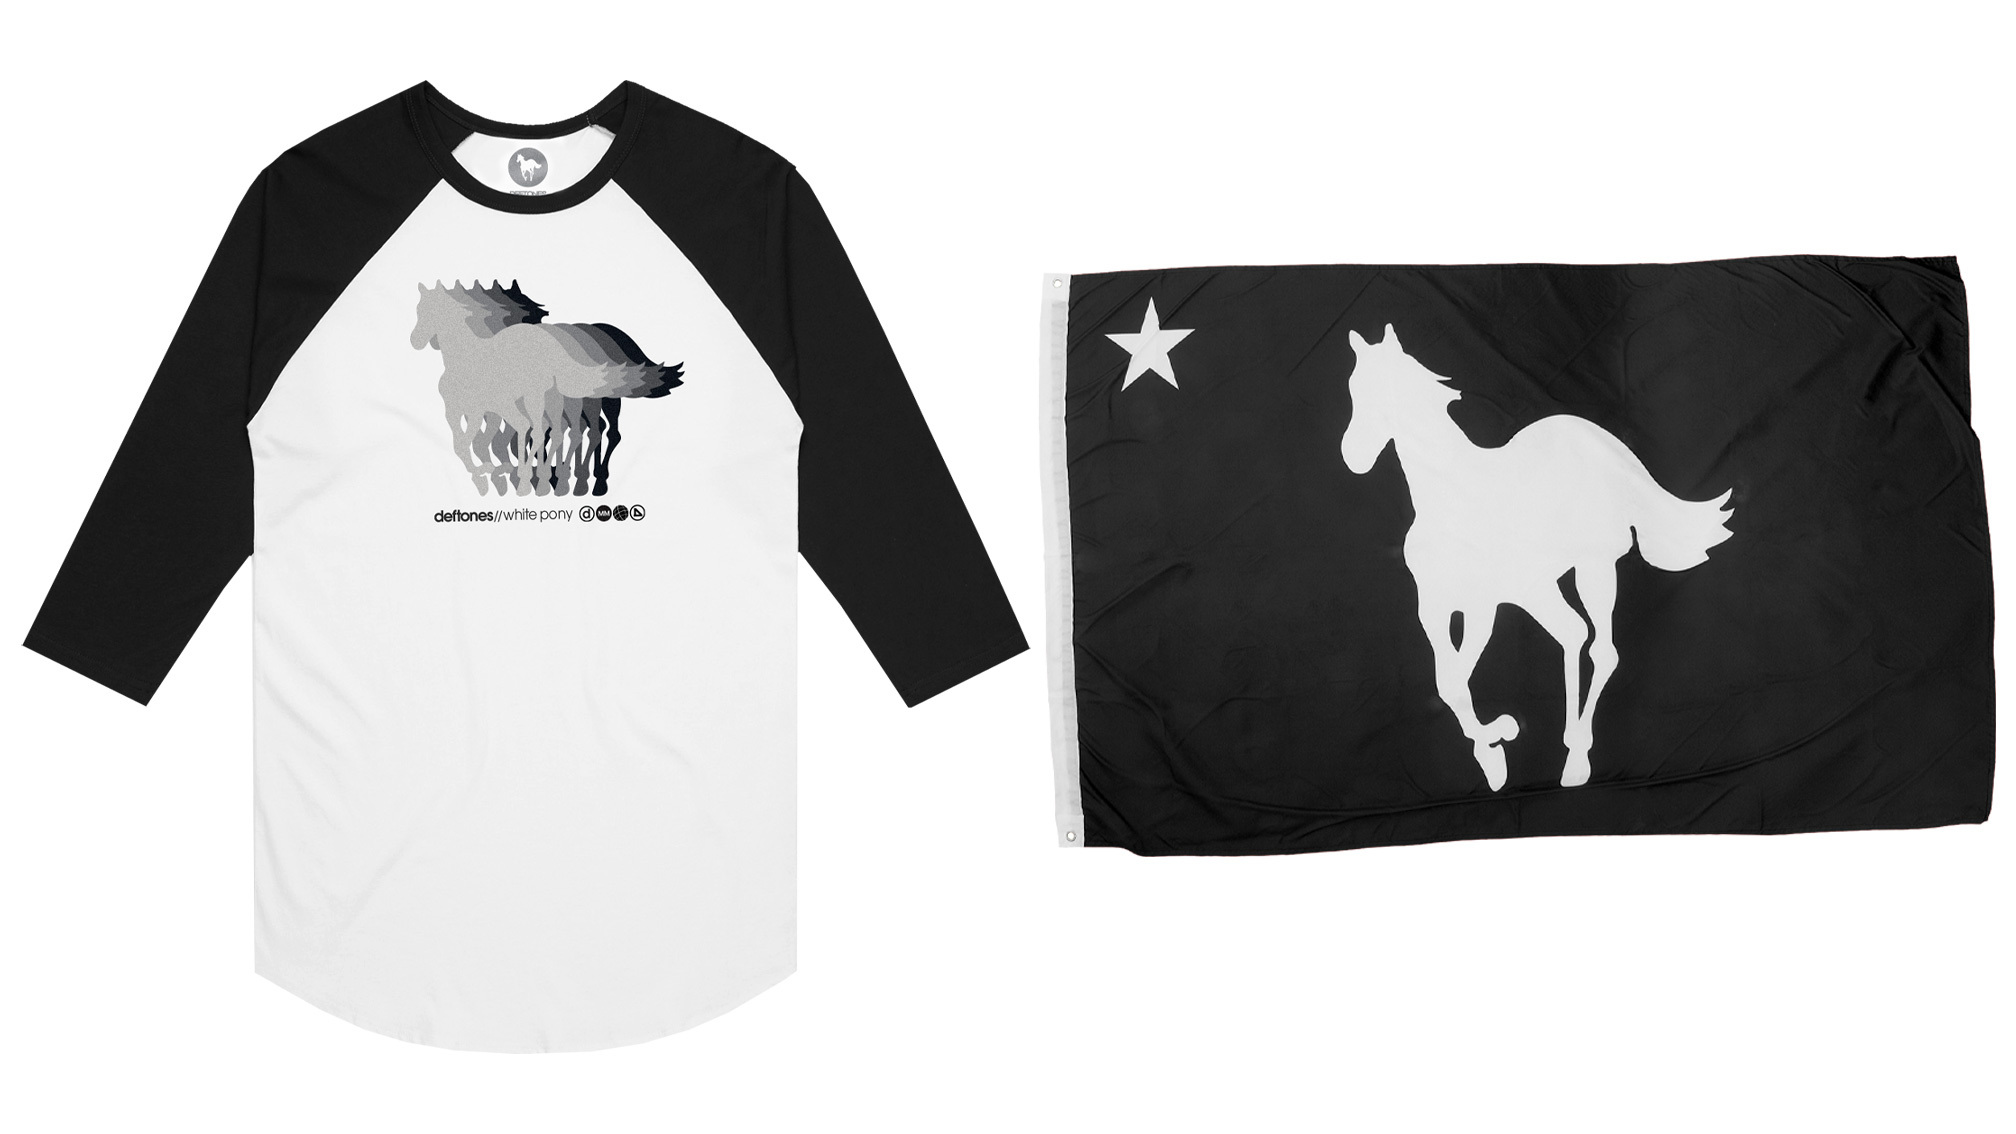 deftones white pony limited edition black